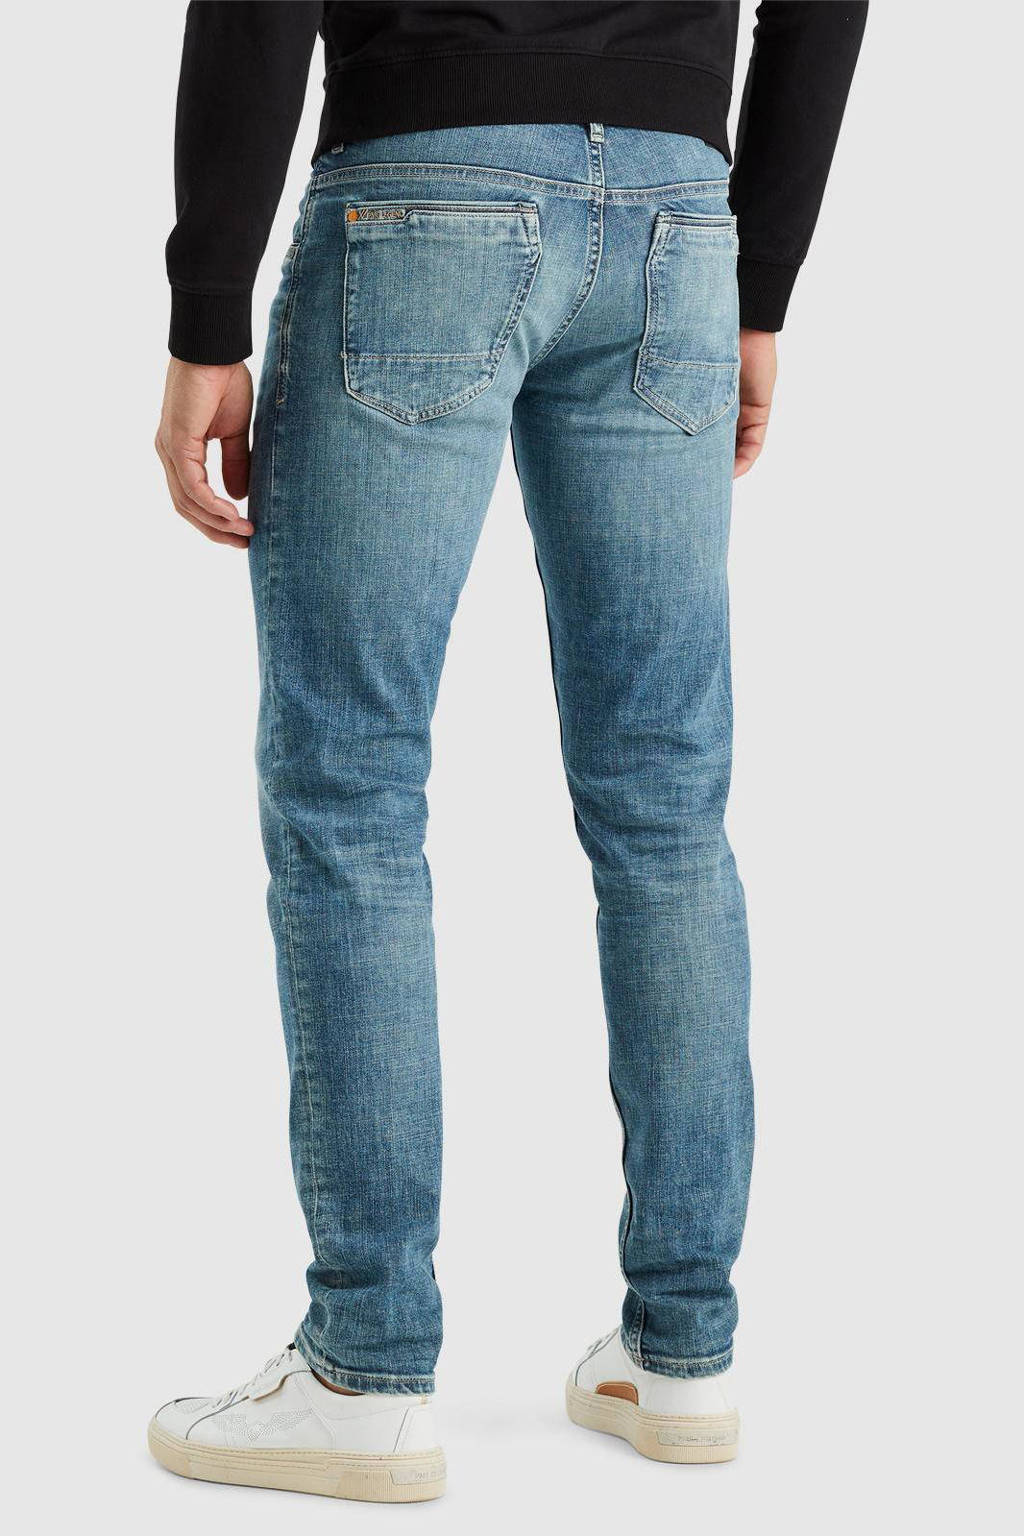 PME Legend slim fit jeans air XV blue bright | DENIM wehkamp